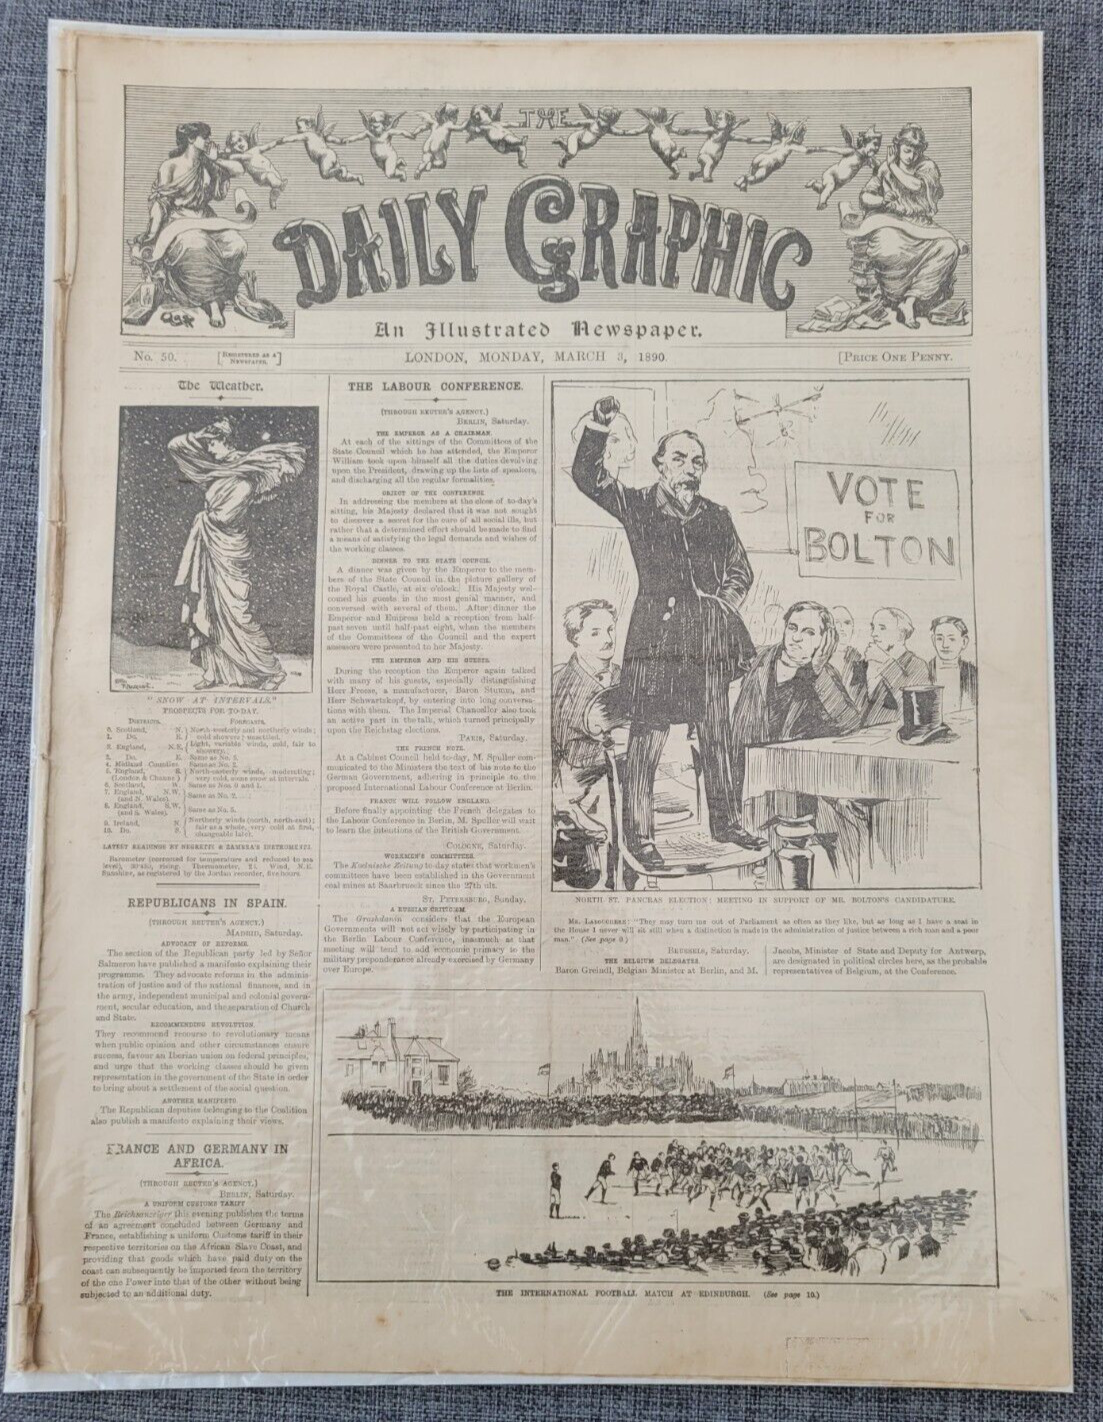 DAILY GRAPHIC RUGBY EDINBURGH SLAVE COAST 3RD MARCH 1890 ORIGINAL NEWSPAPER